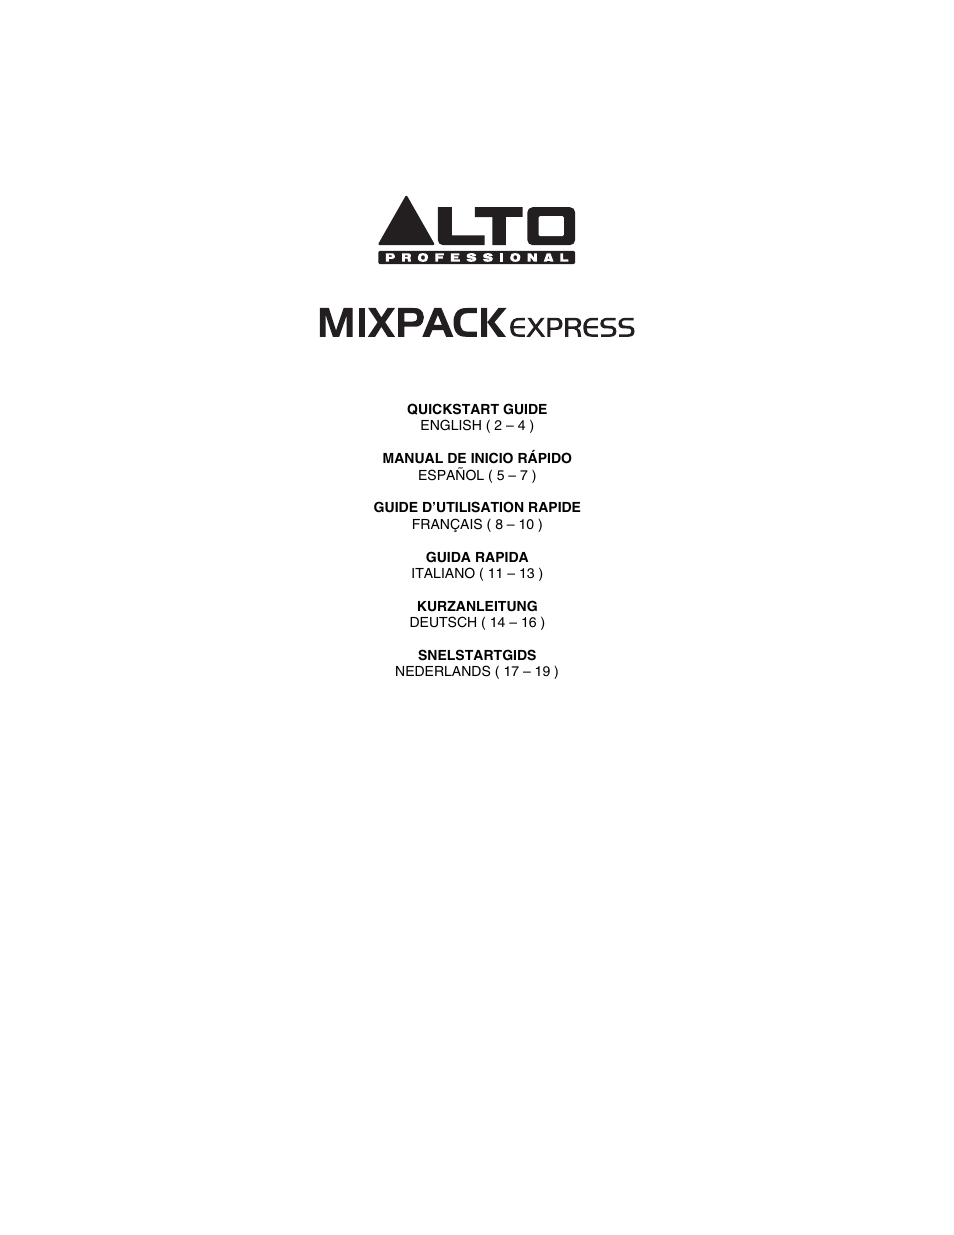 mixpack express